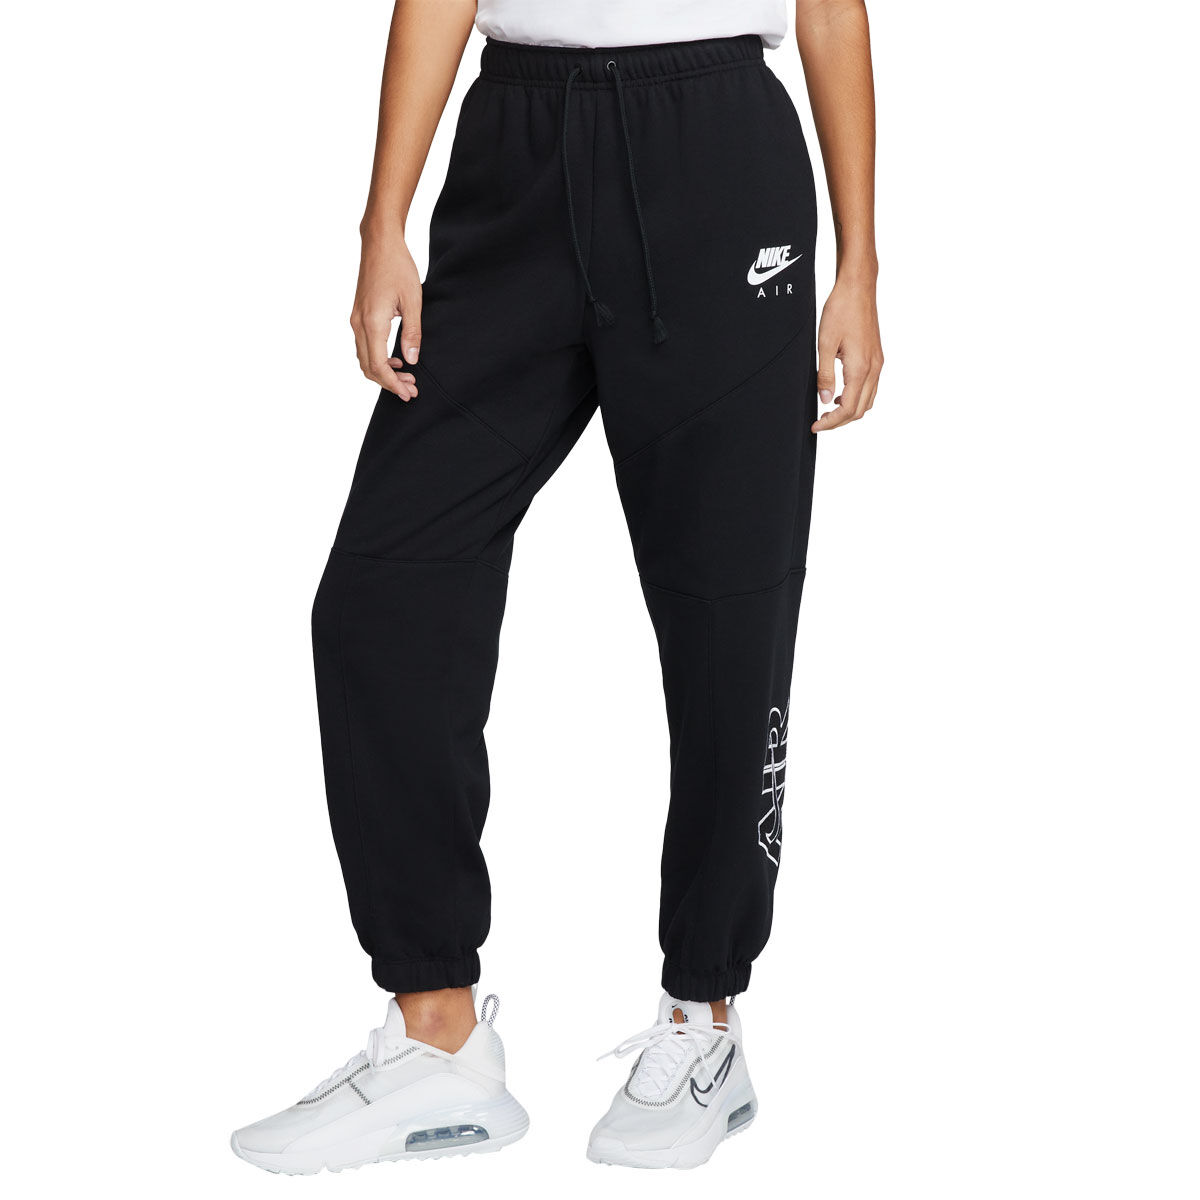 Nike Womens Fleece Pants - Black